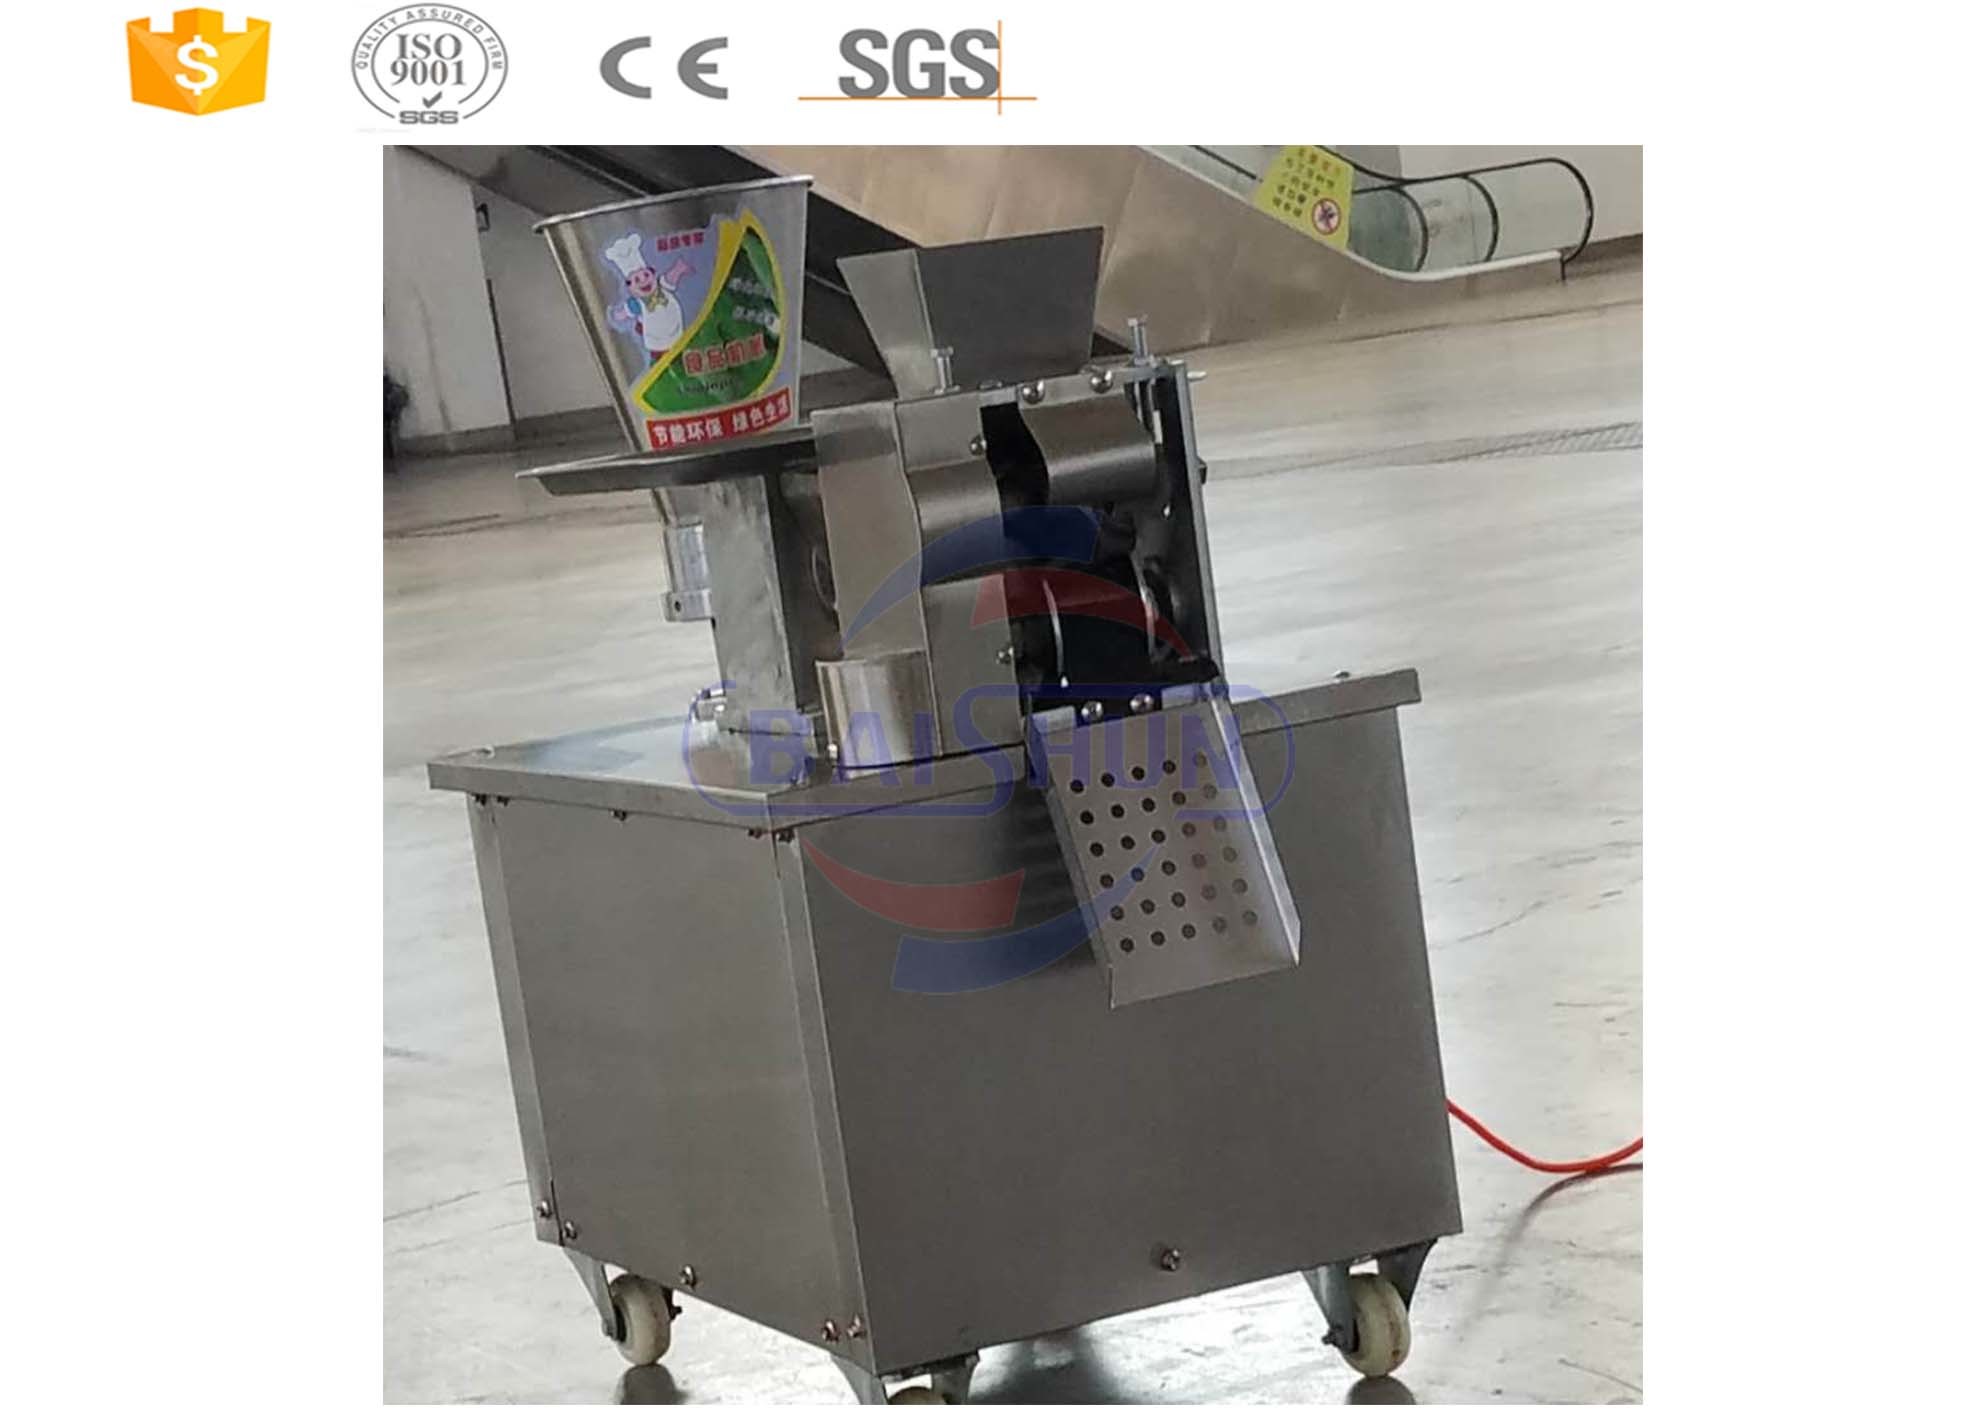  High Speed Industrial Food Machinery Small Dumpling Machine For Restaurants / School Manufactures